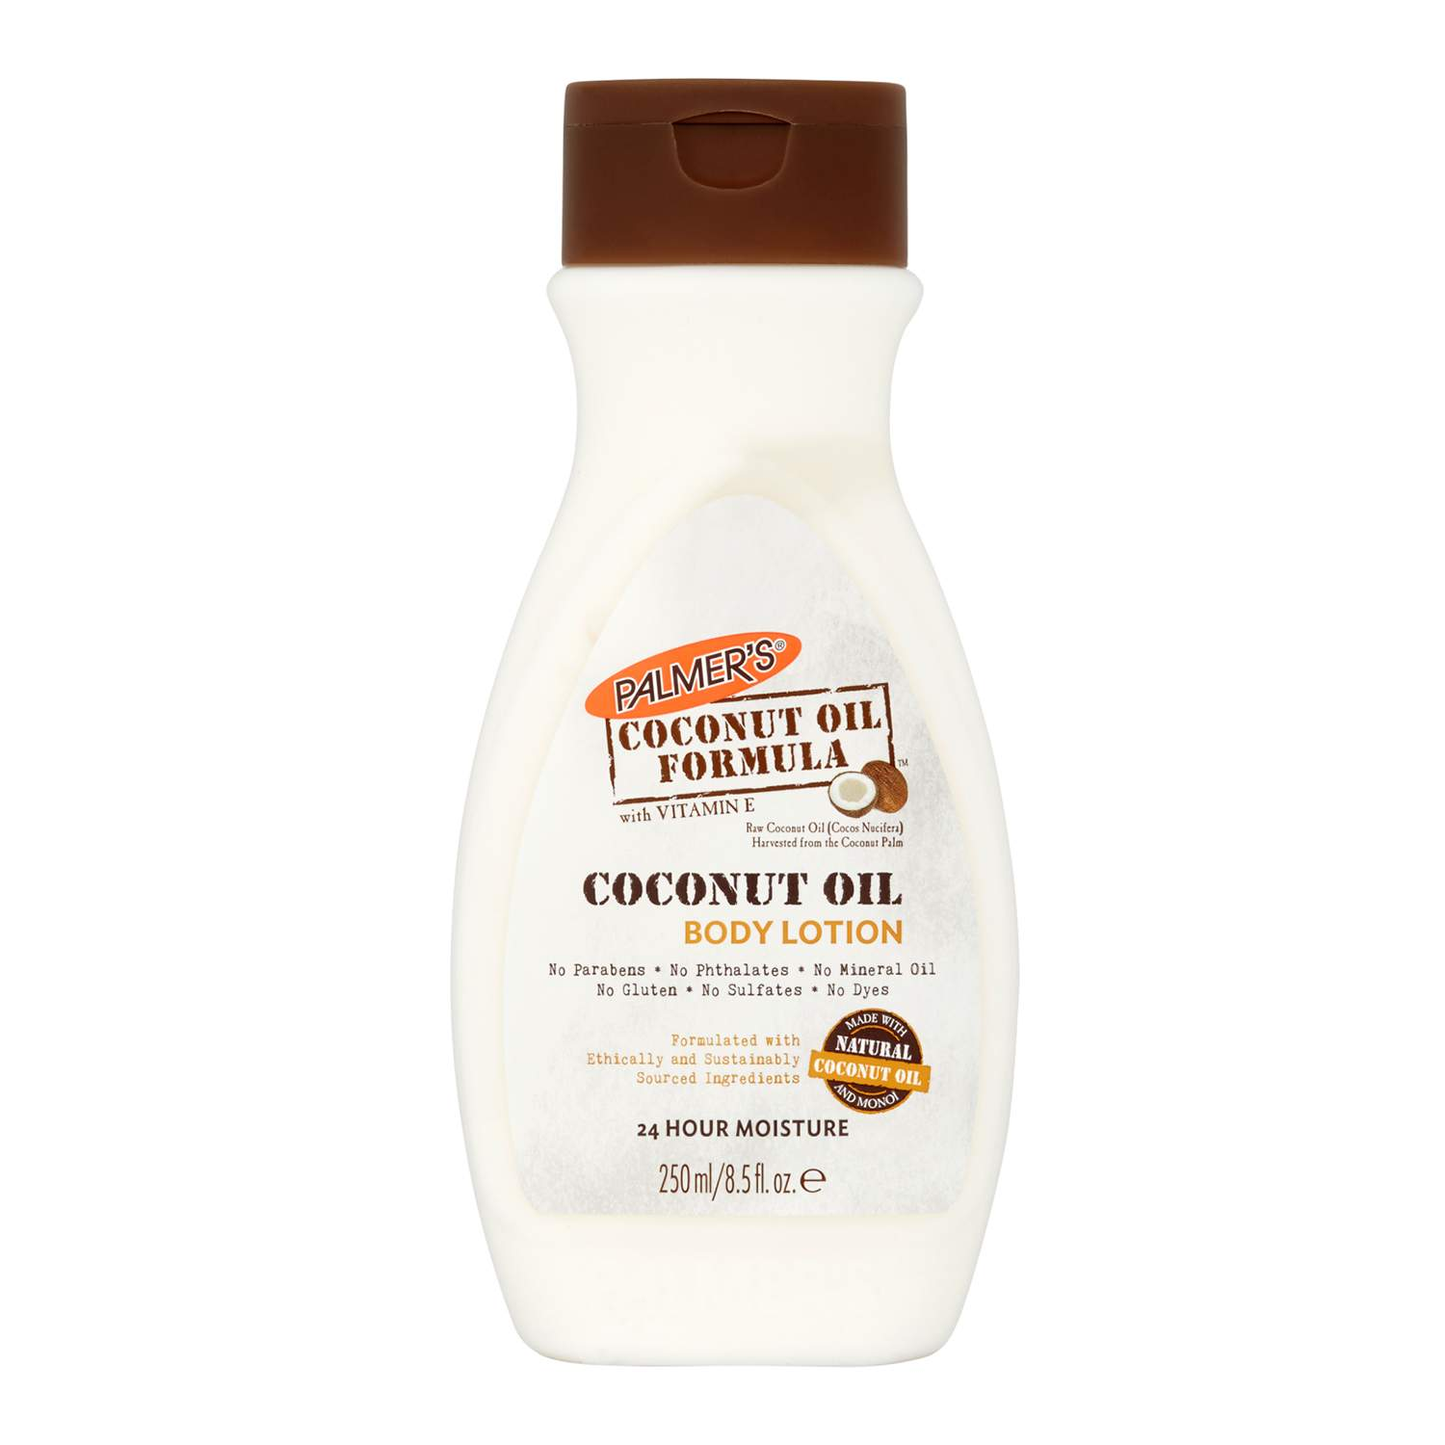 Palmer's Coconut Oil Formula - Coconut Oil Body Lotion